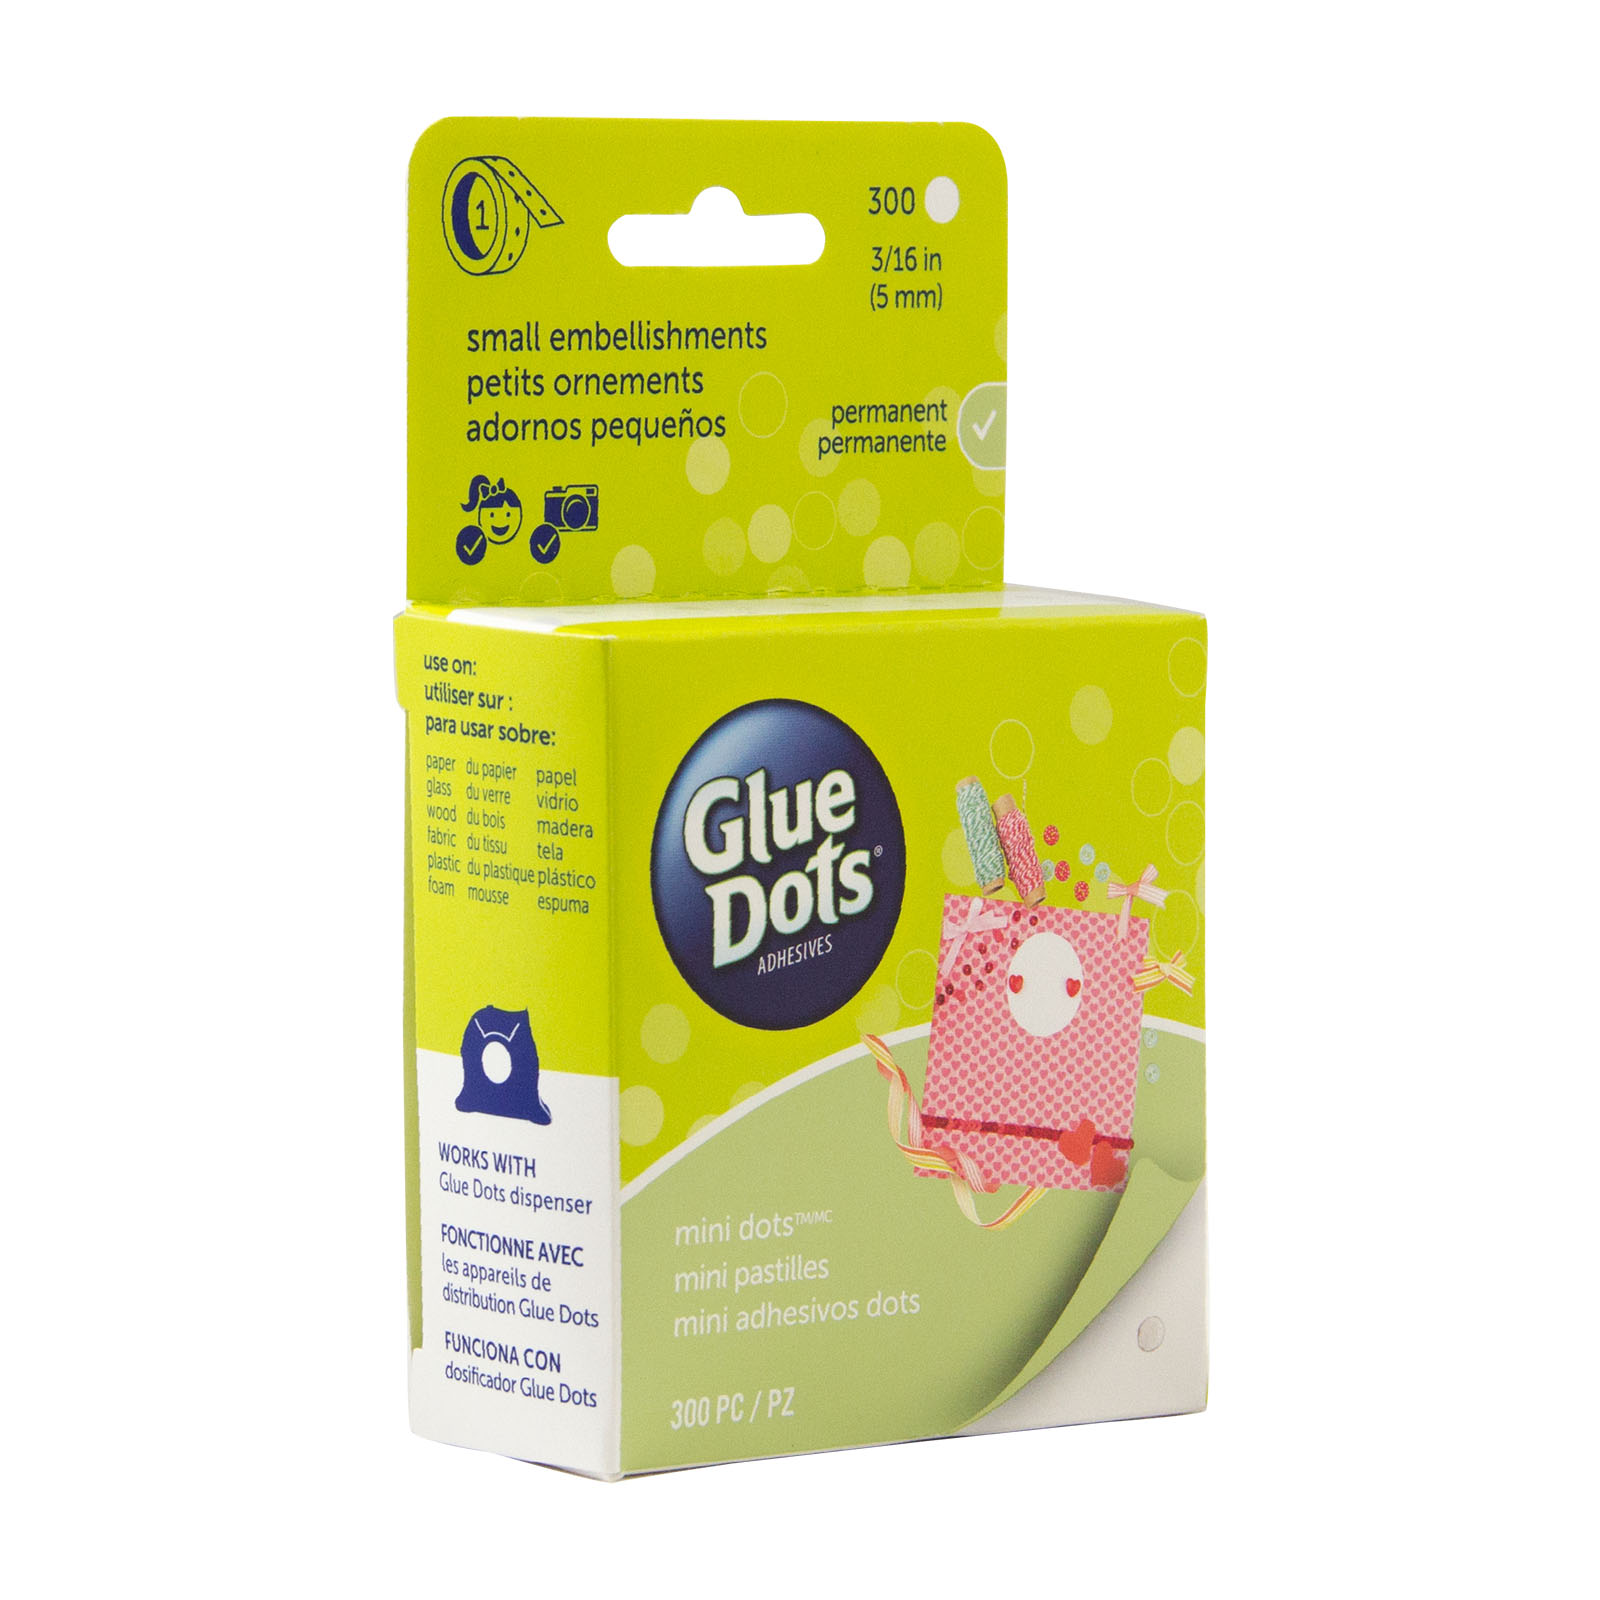 Glue Dots Mini Sheets Value Pack